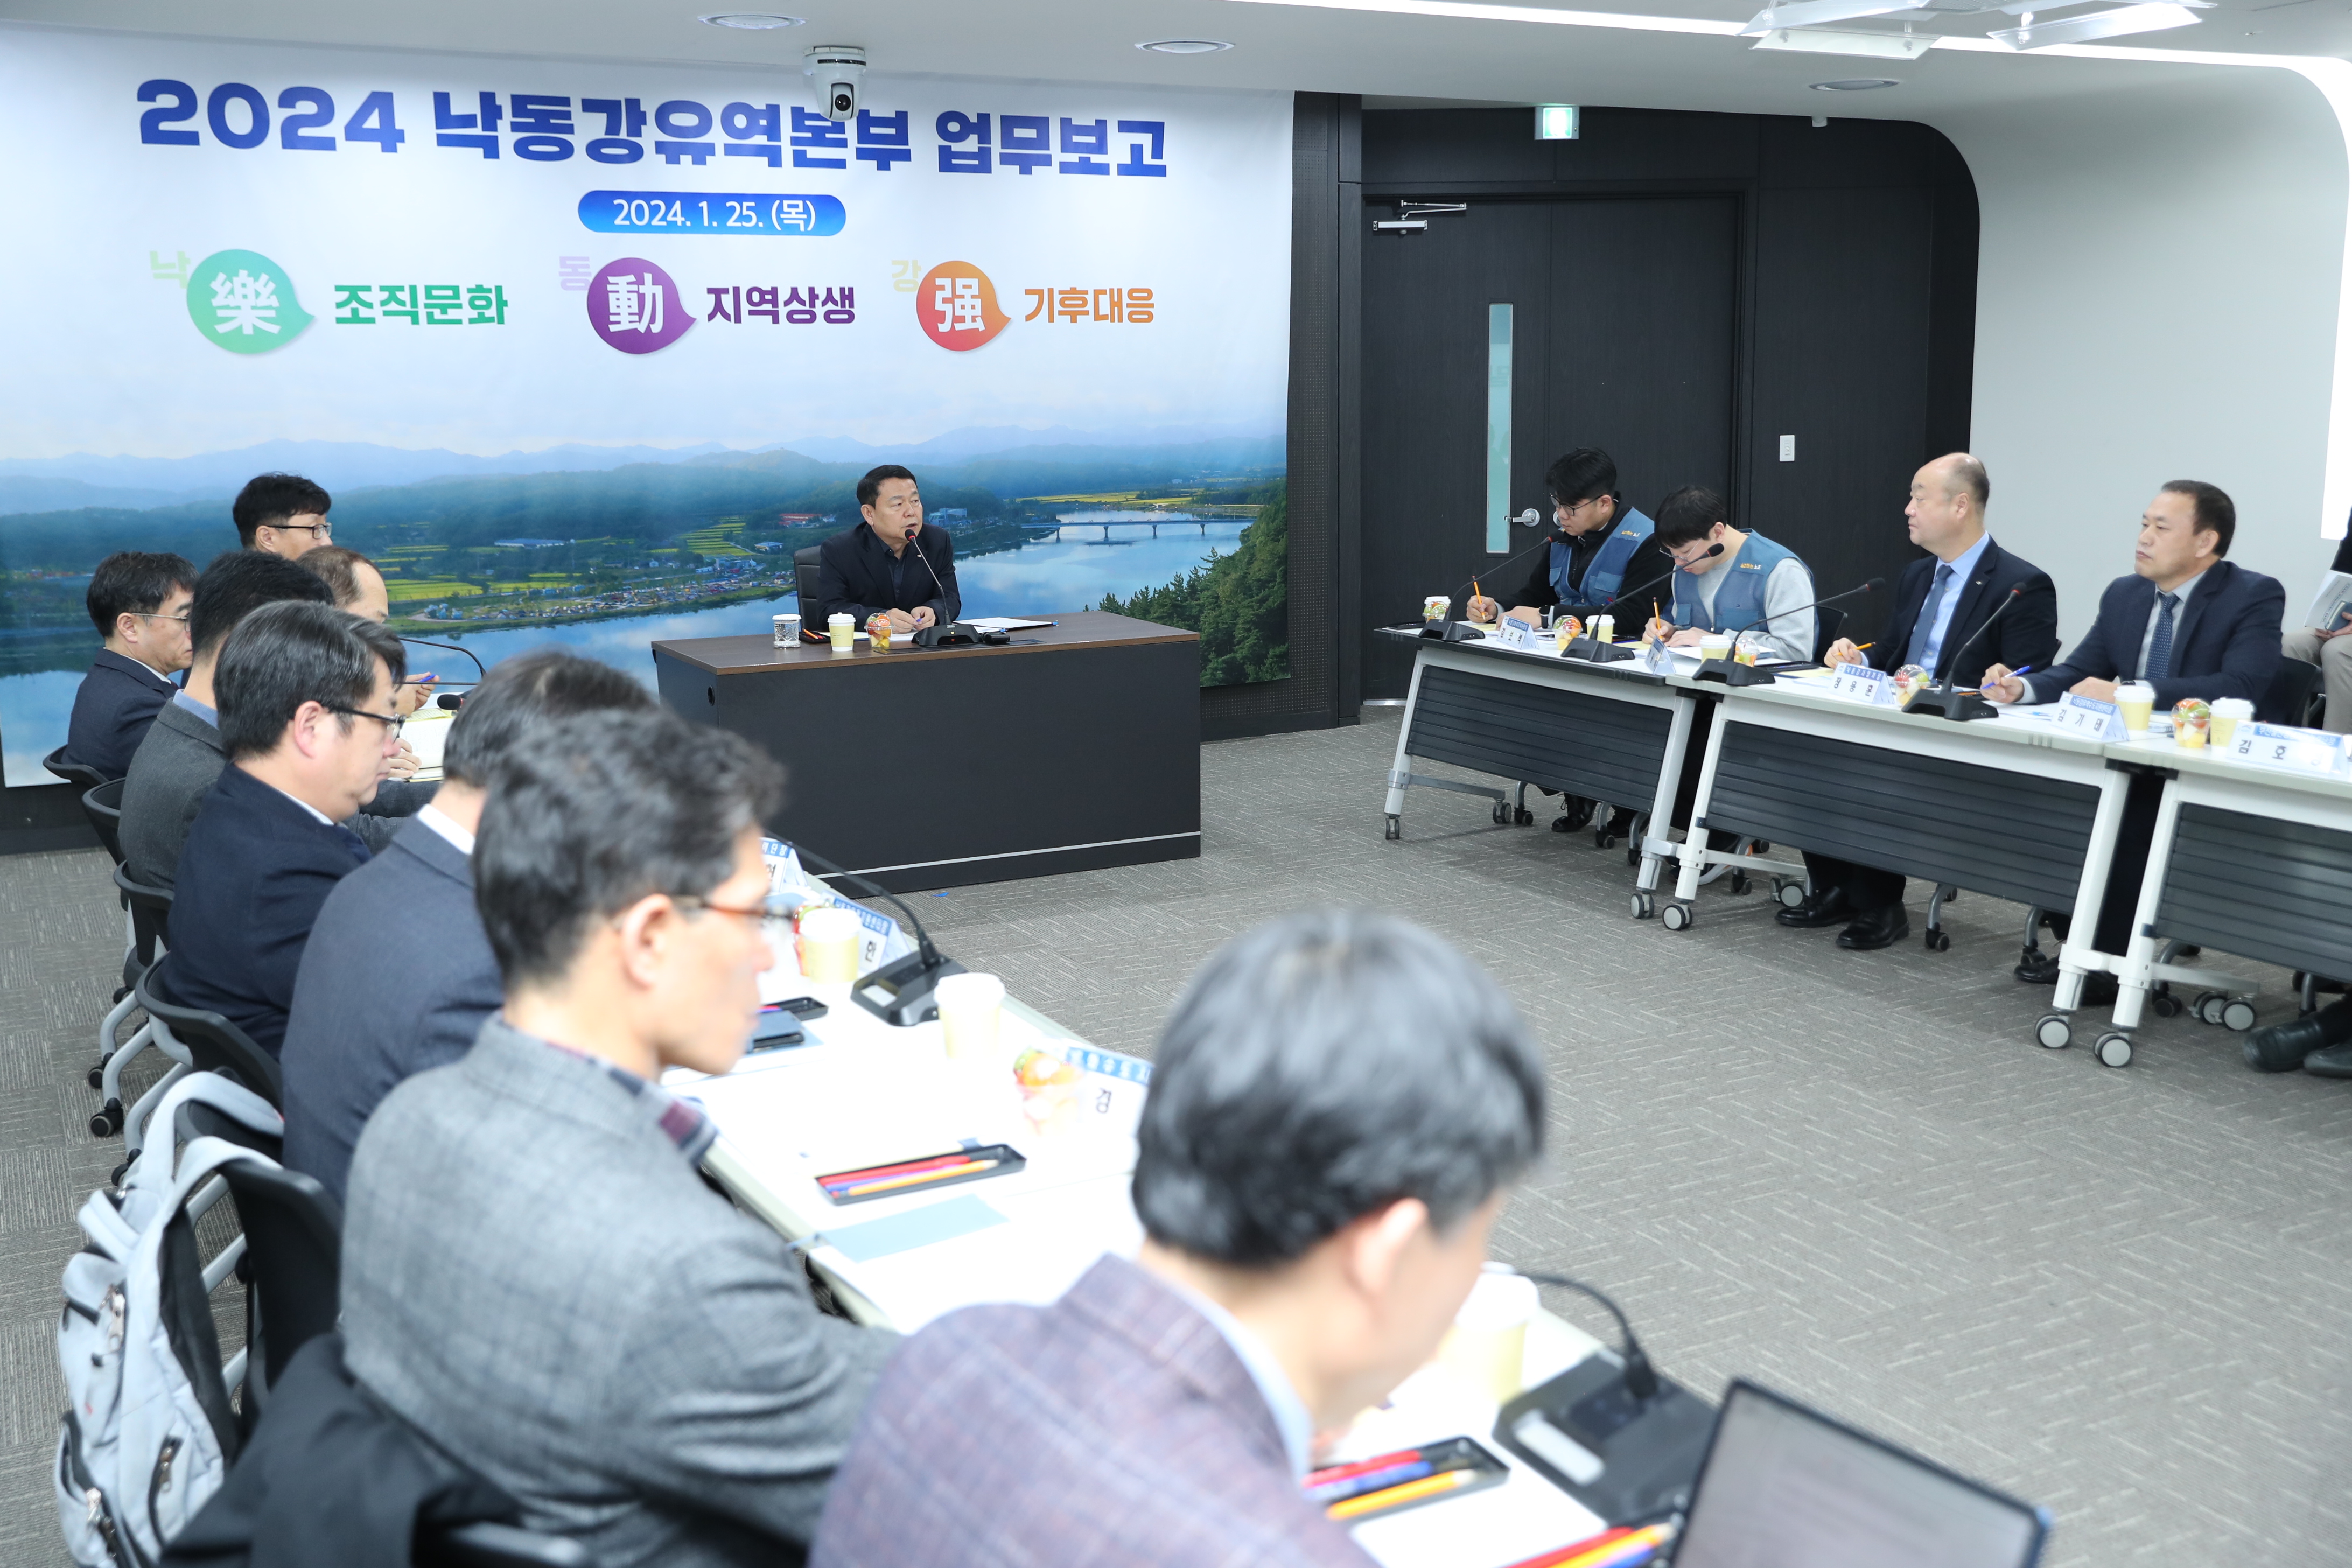 Nakdonggang Division Business Report